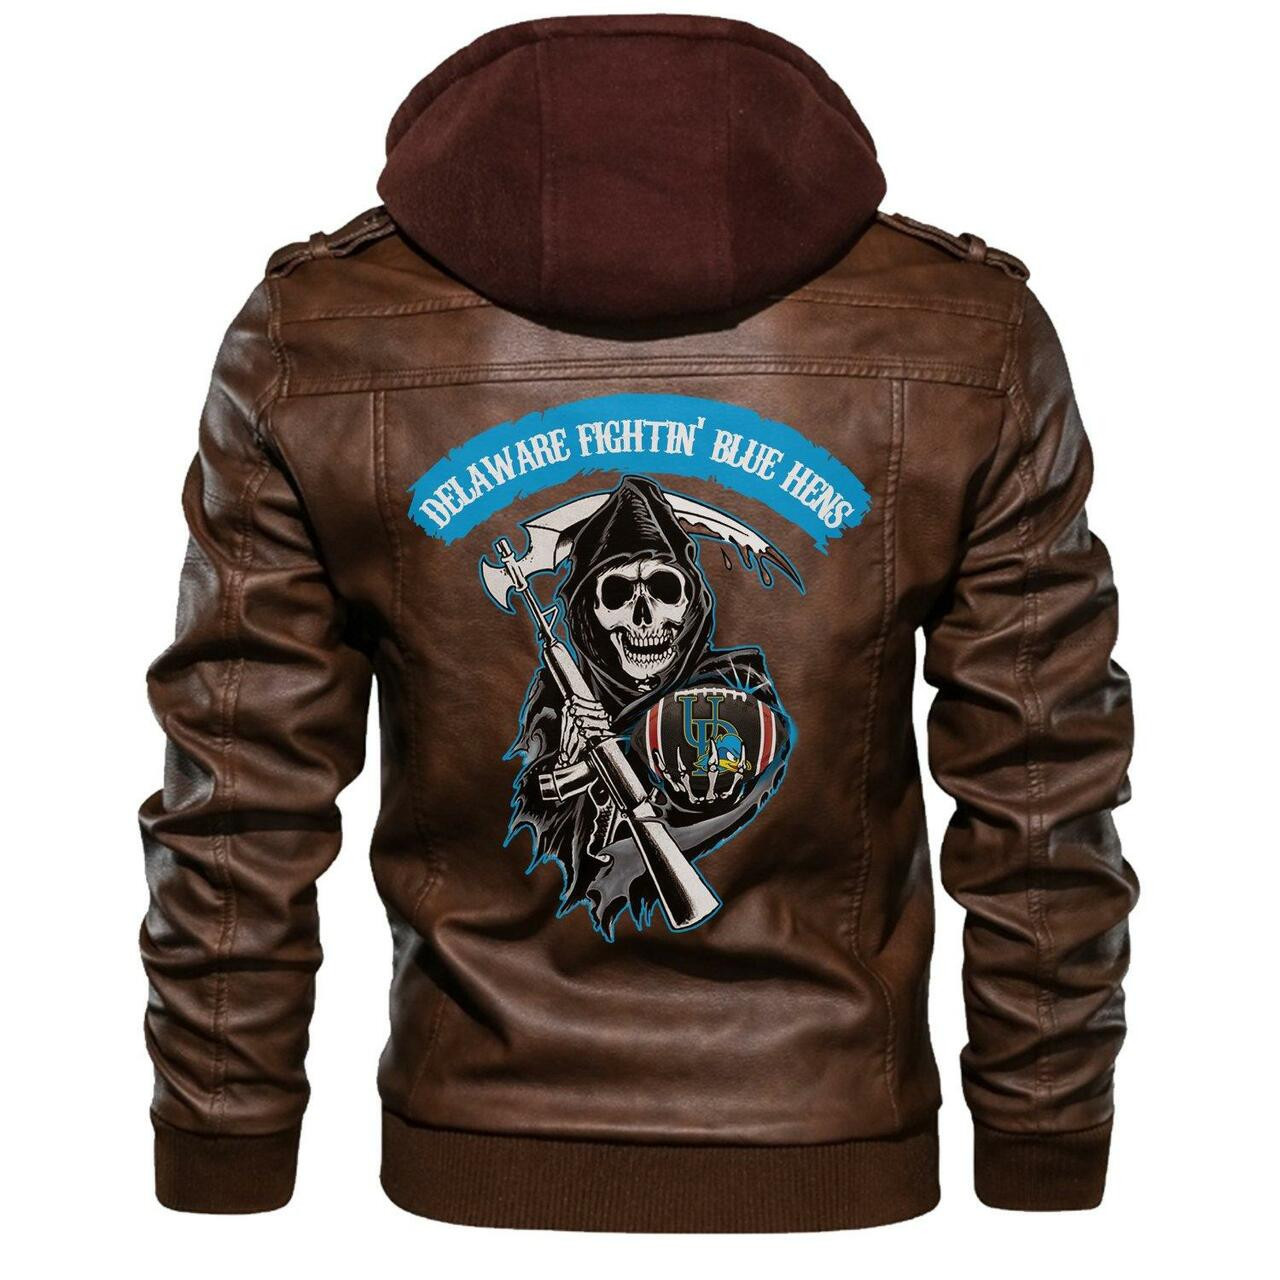 Top leather jacket Sells Best on Techcomshop 127